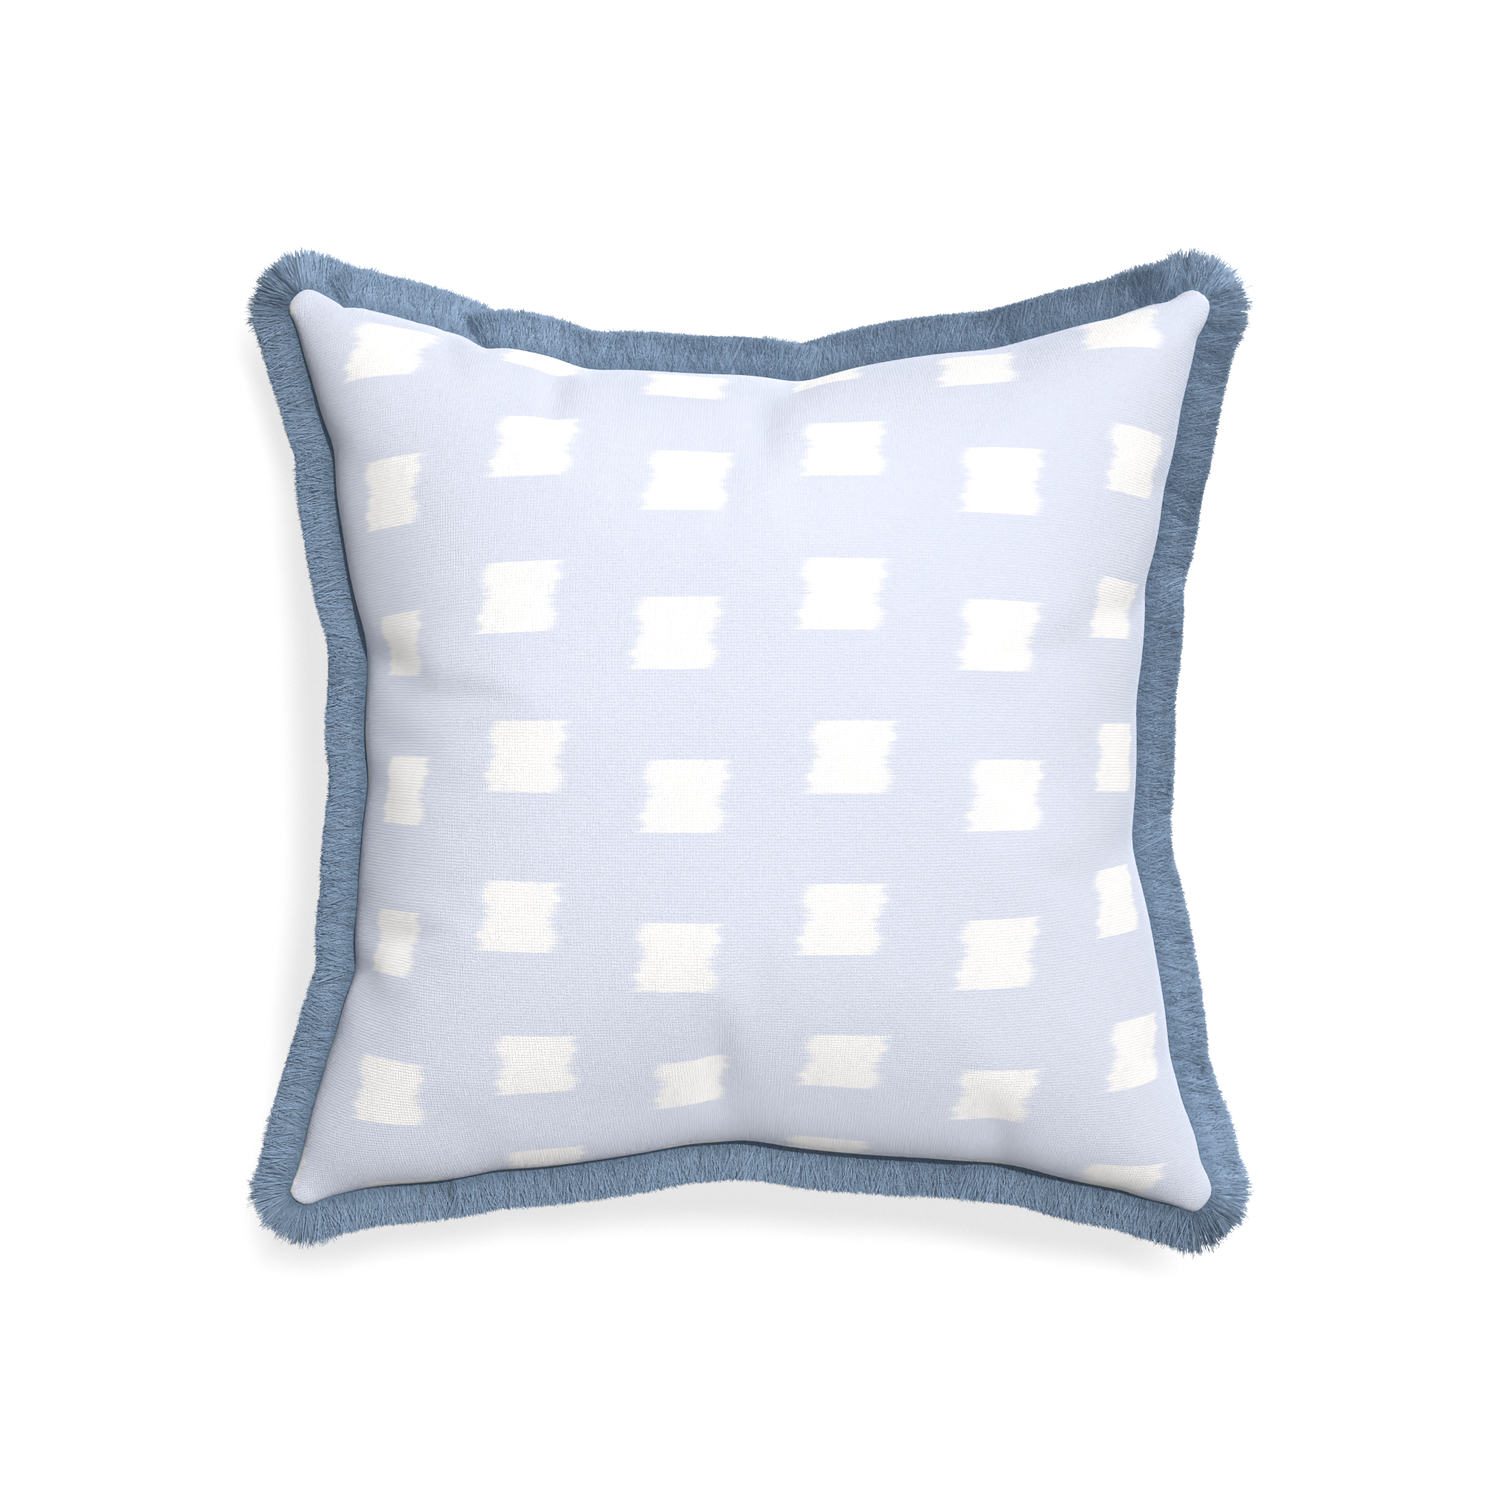 20-square denton custom sky blue patternpillow with sky fringe on white background